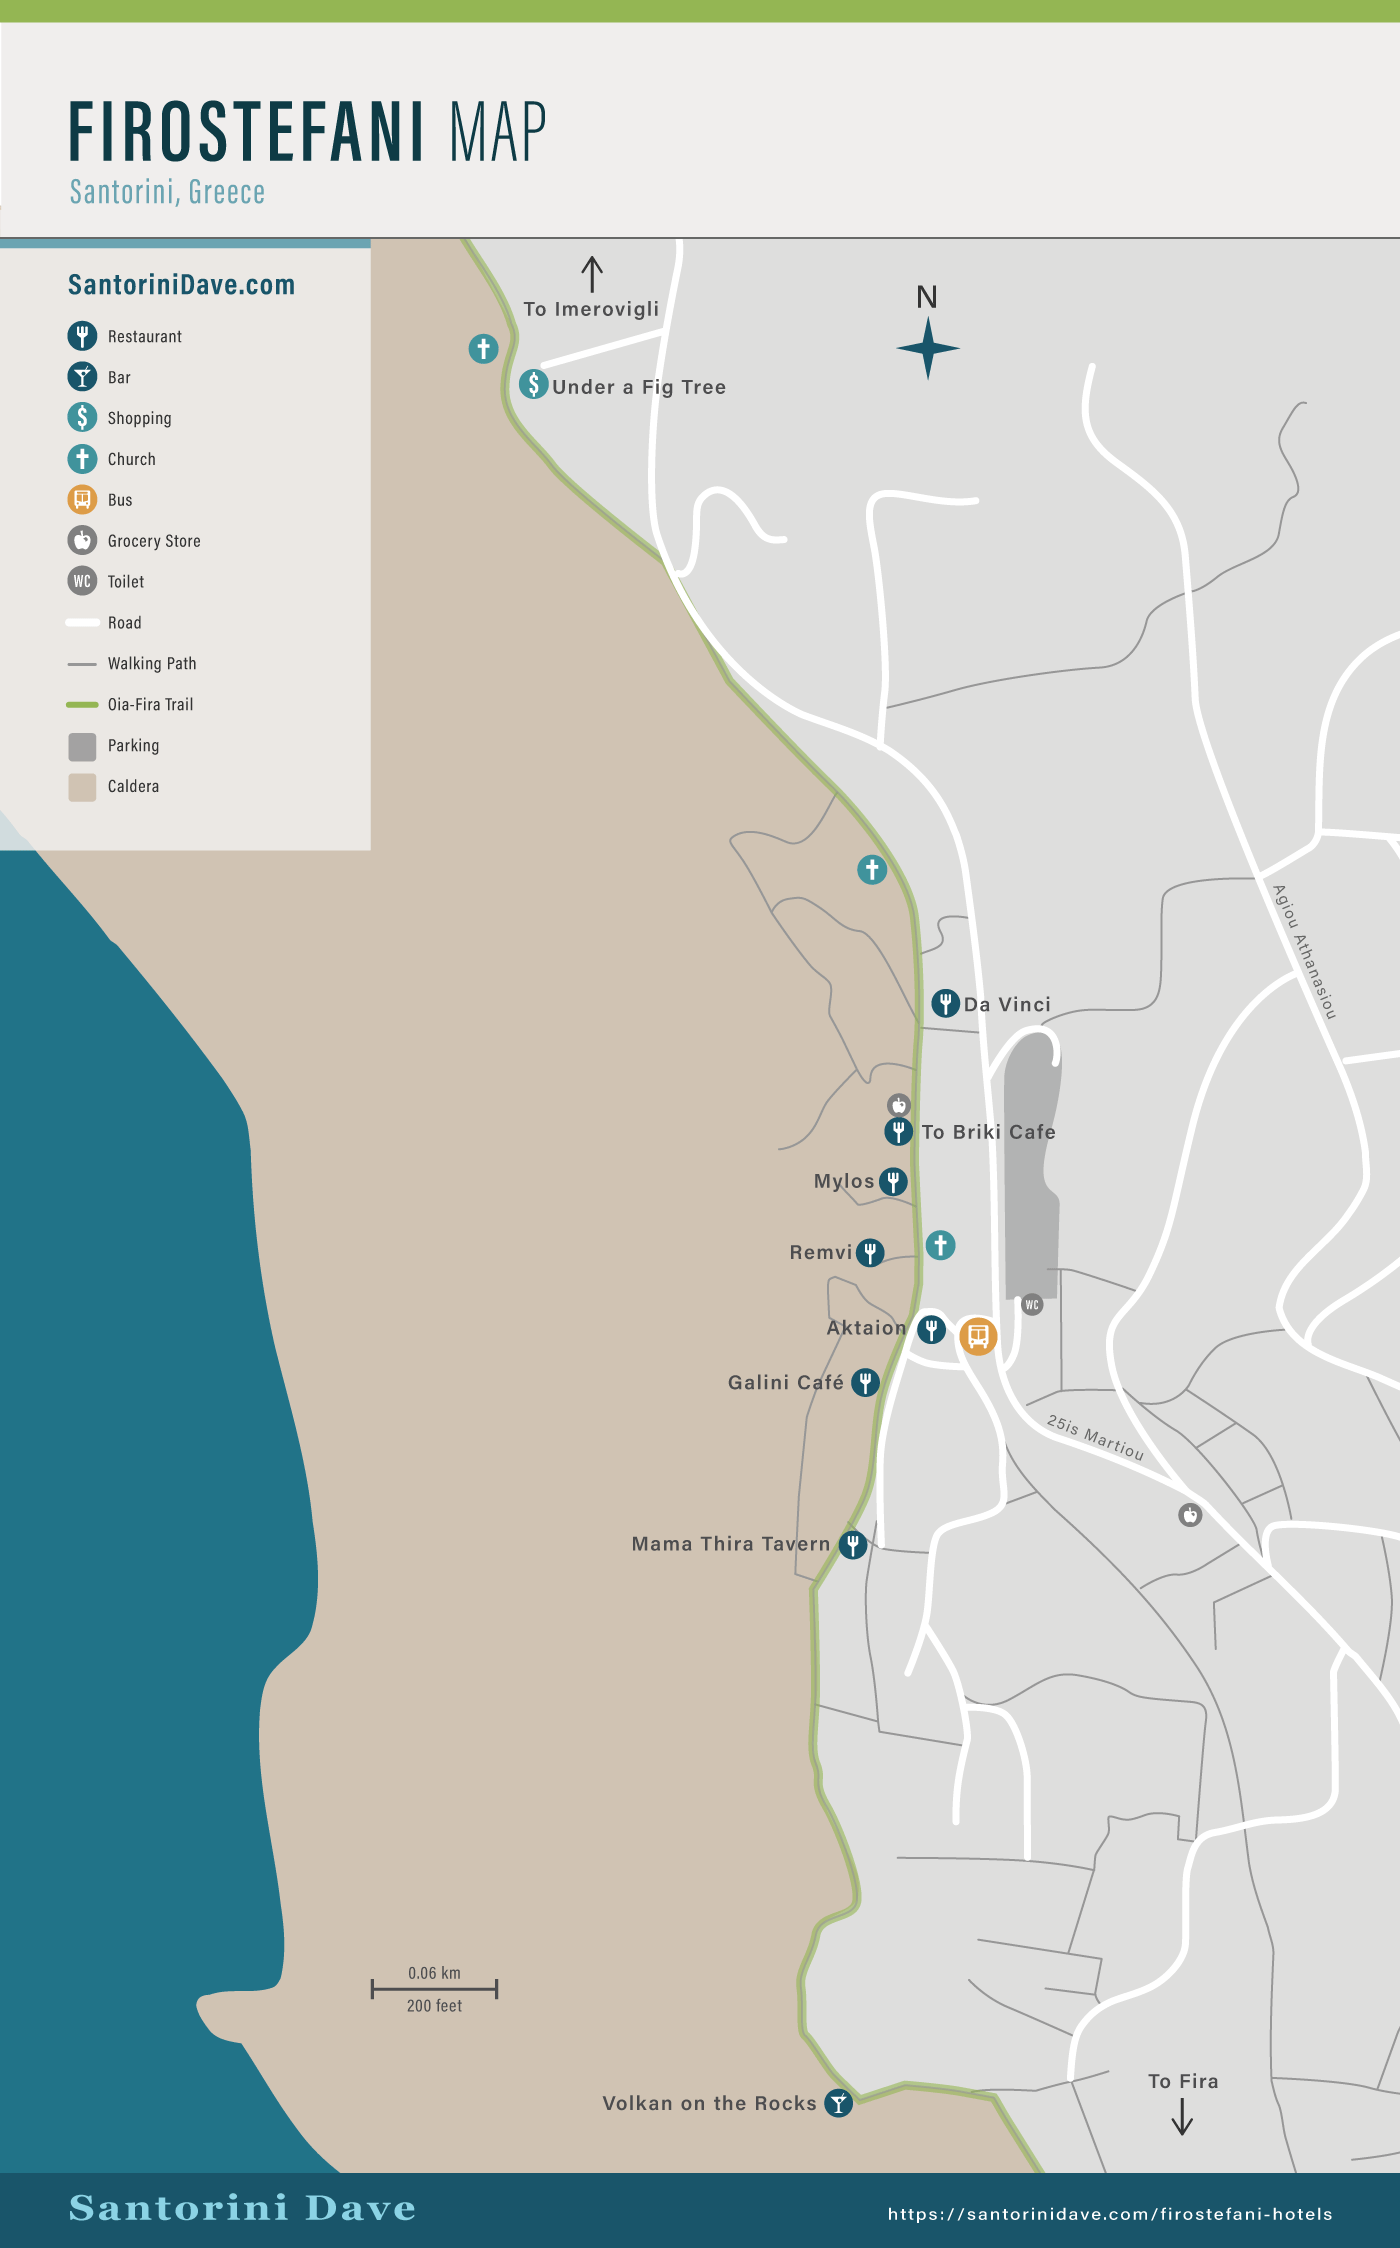 Map of the town of Firostefani in Santorini